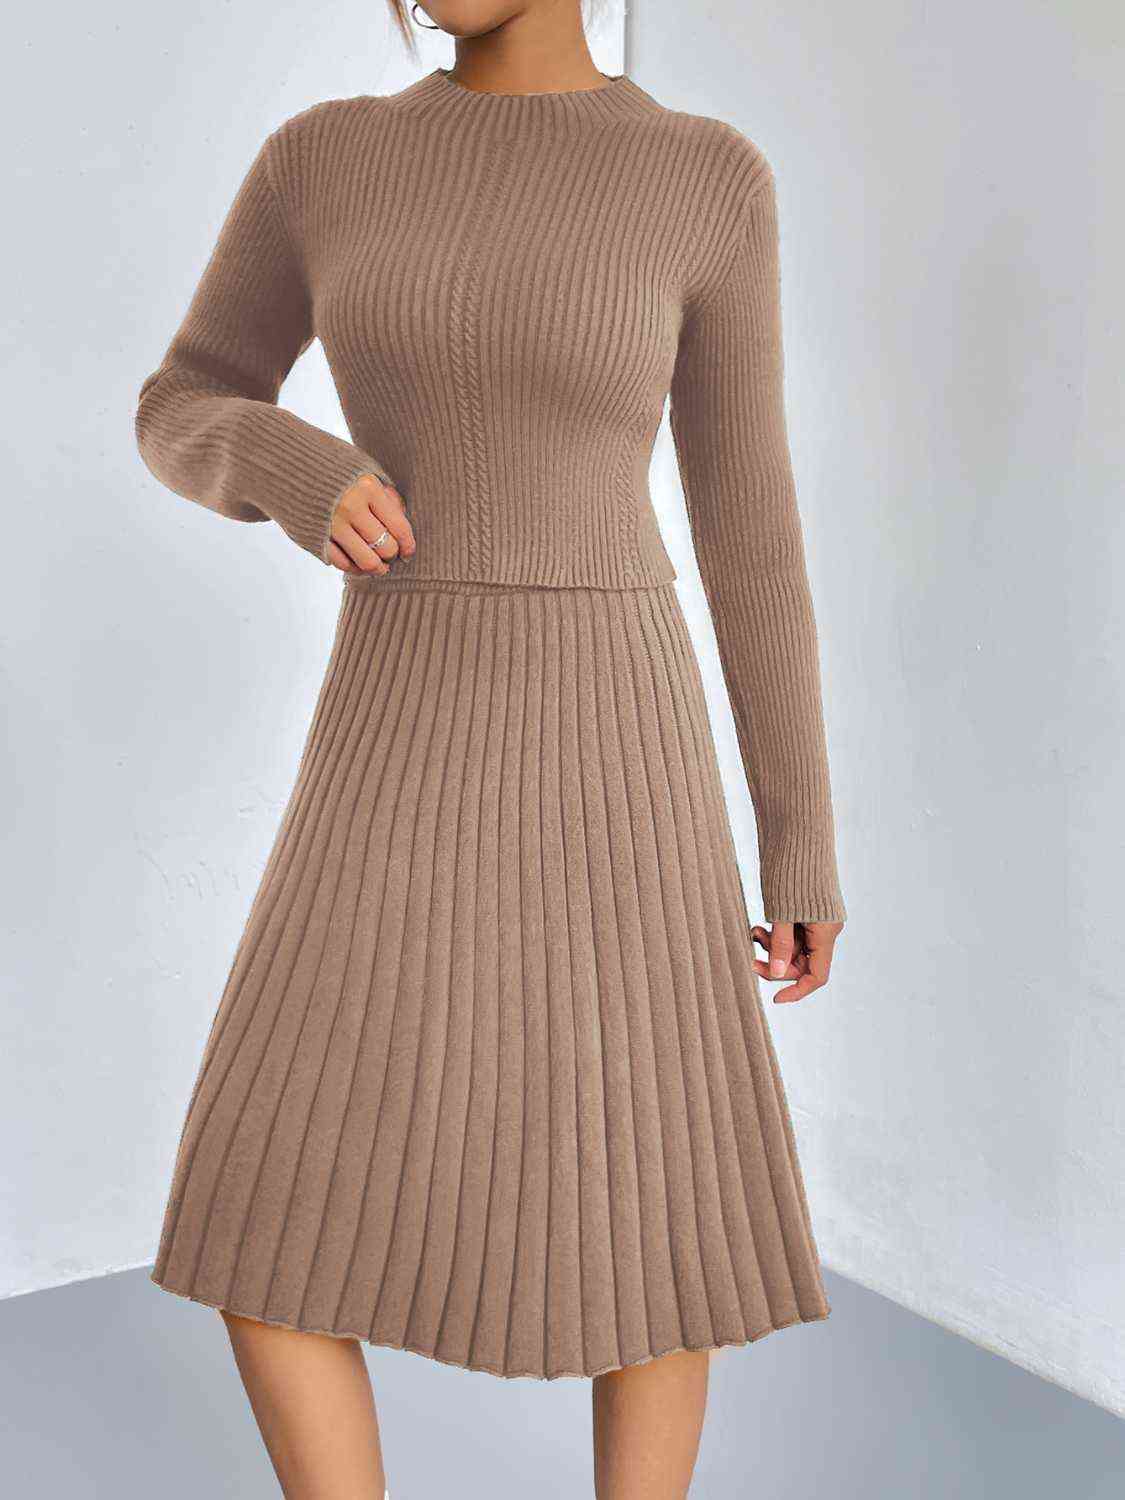 Women's Rib-Knit Sweater and Skirt Set Dust Storm